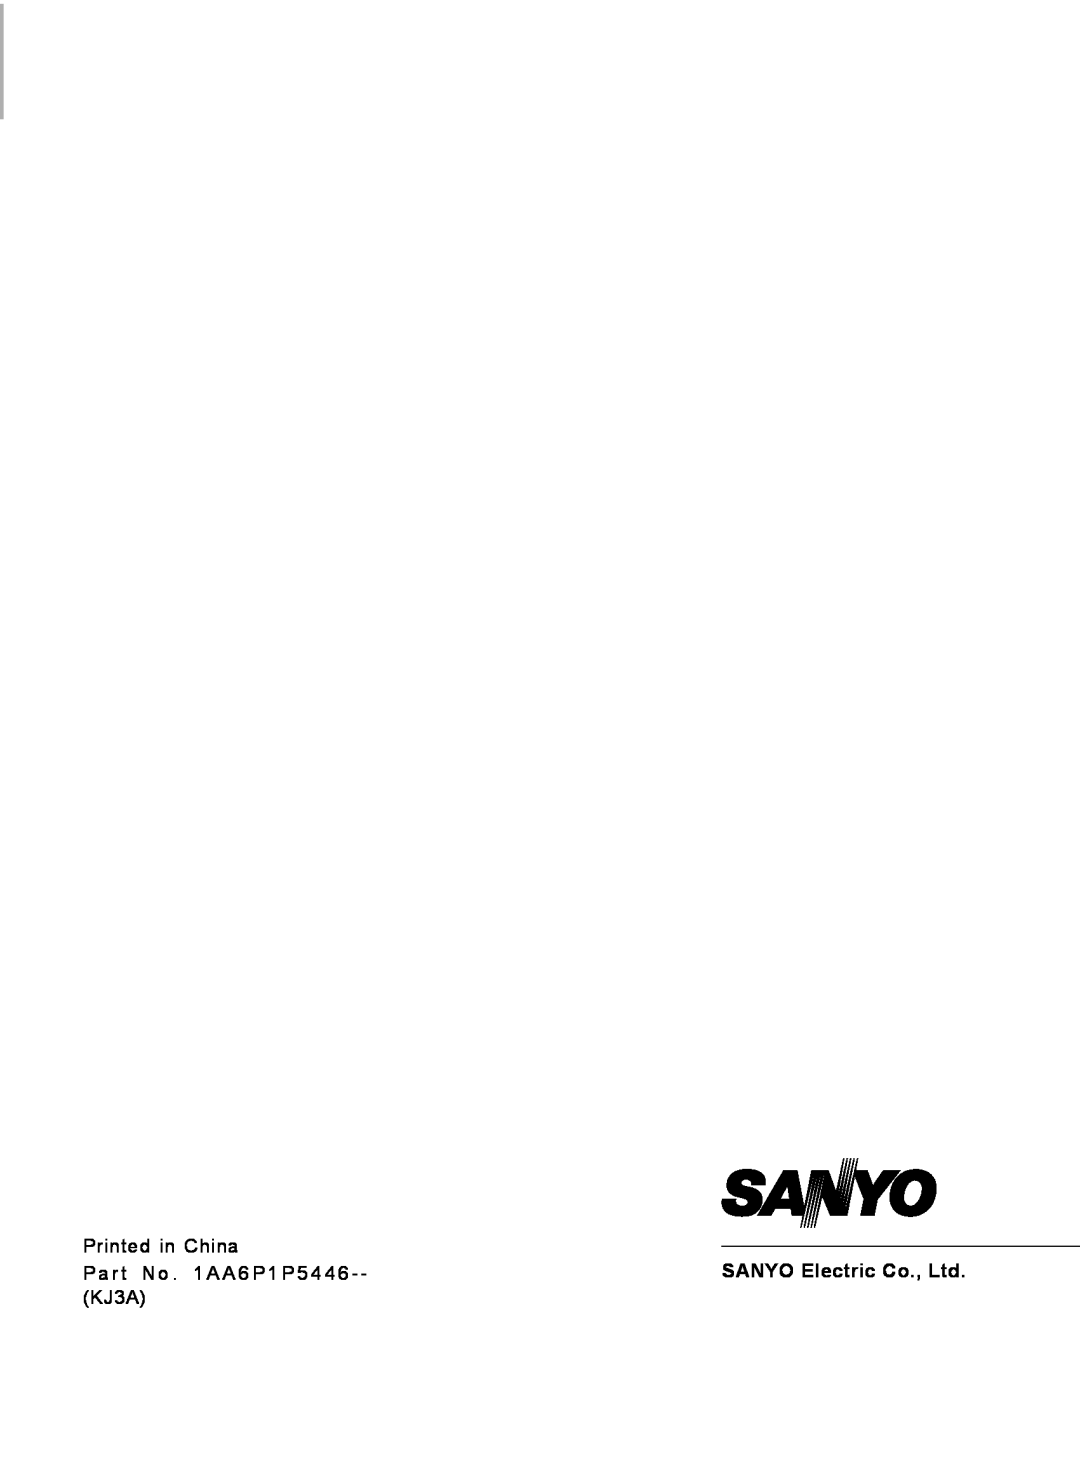 Sanyo PCL-WXU10N, PCL-WXU10E, PCL-WXU10B manual EN-41, Printed in China, Part No . 1AA6P1P5446, KJ3A 